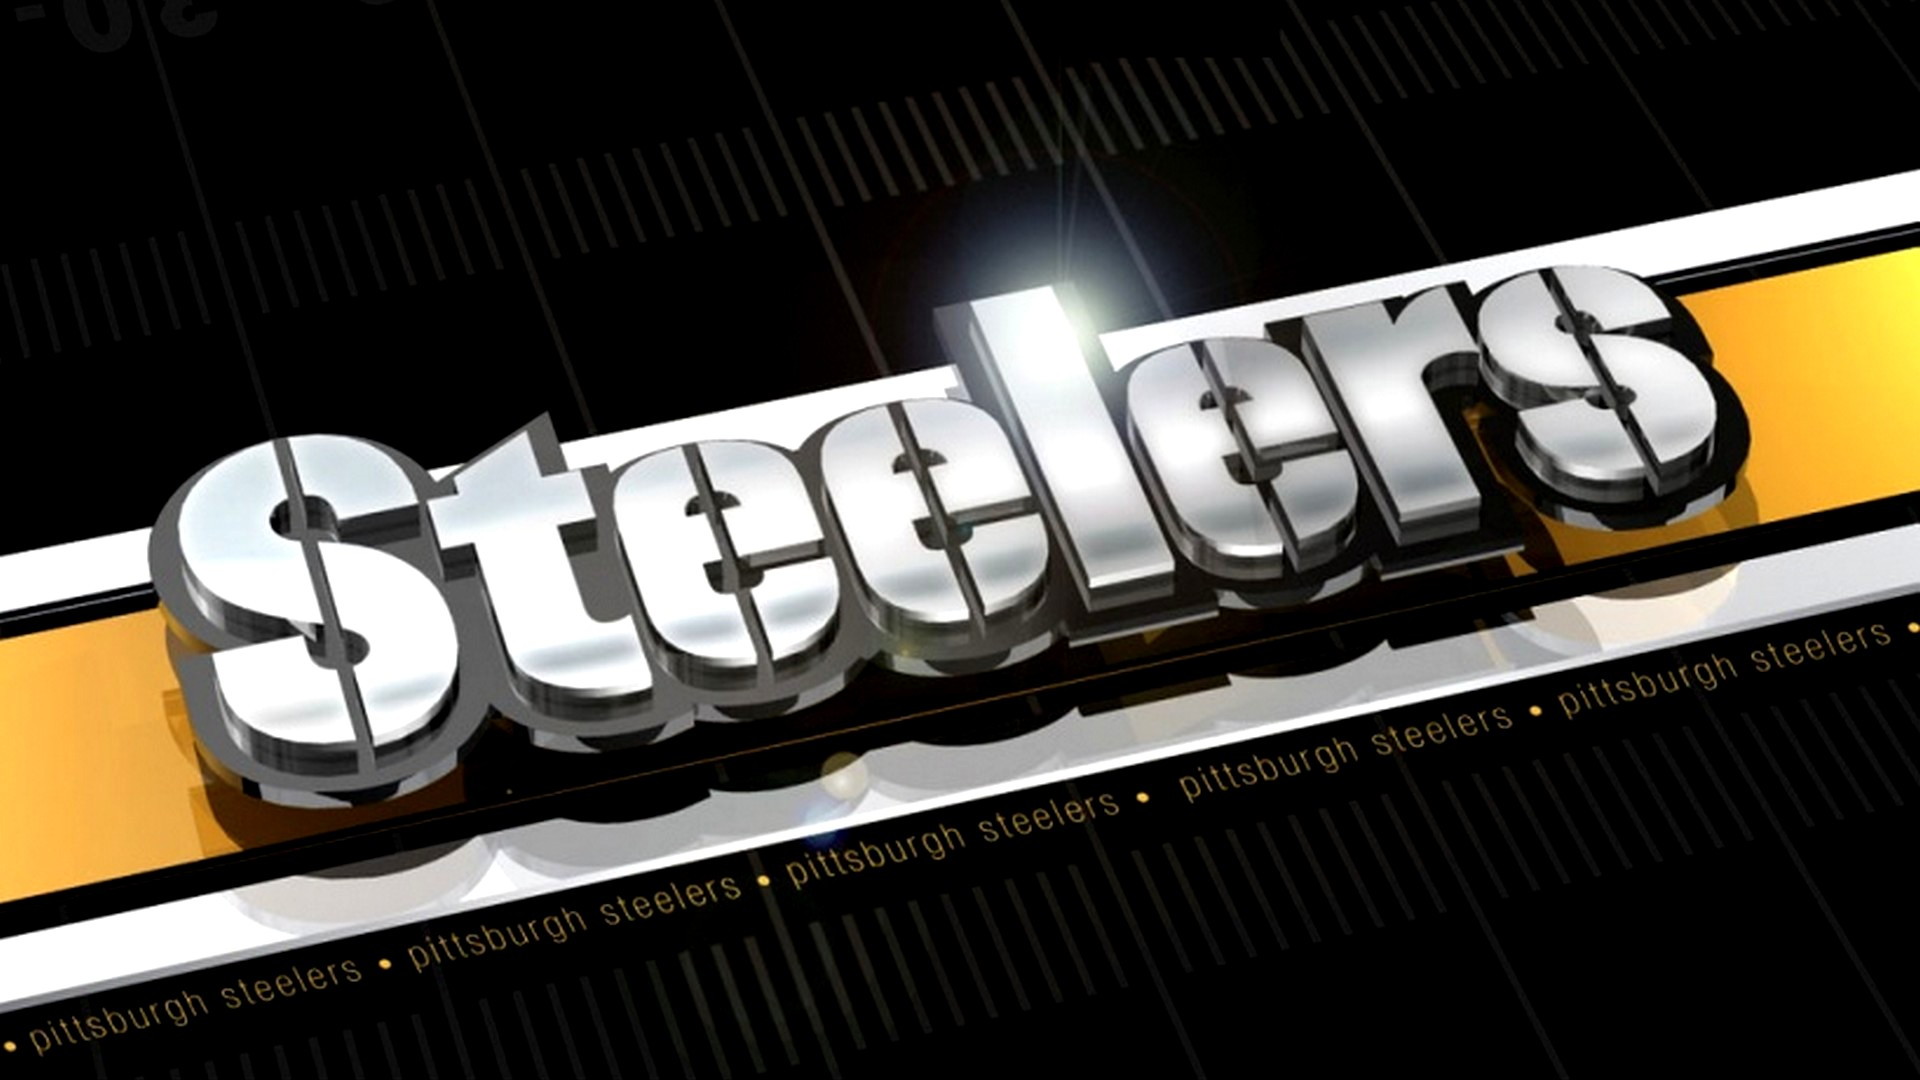 pittsburgh steelers logo wallpaper